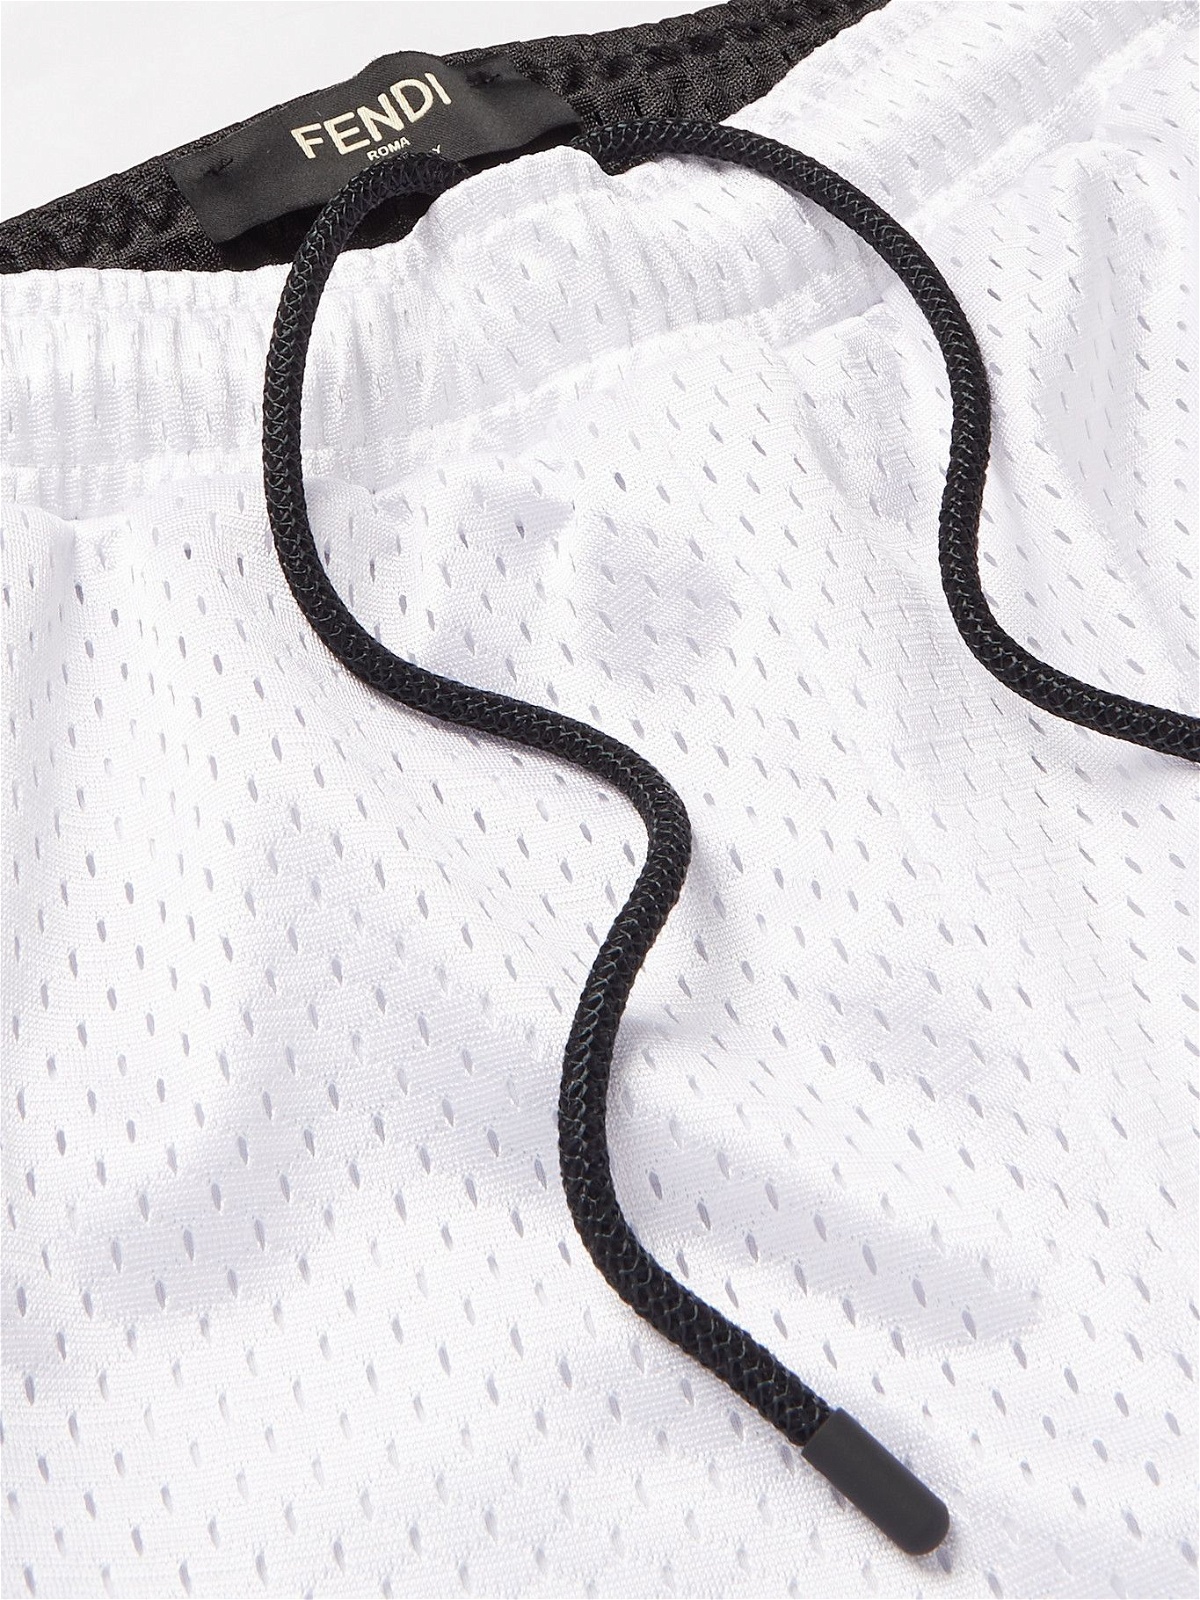 FENDI - Logo-Appliquéd Panelled Jersey Sweatpants - Multi Fendi